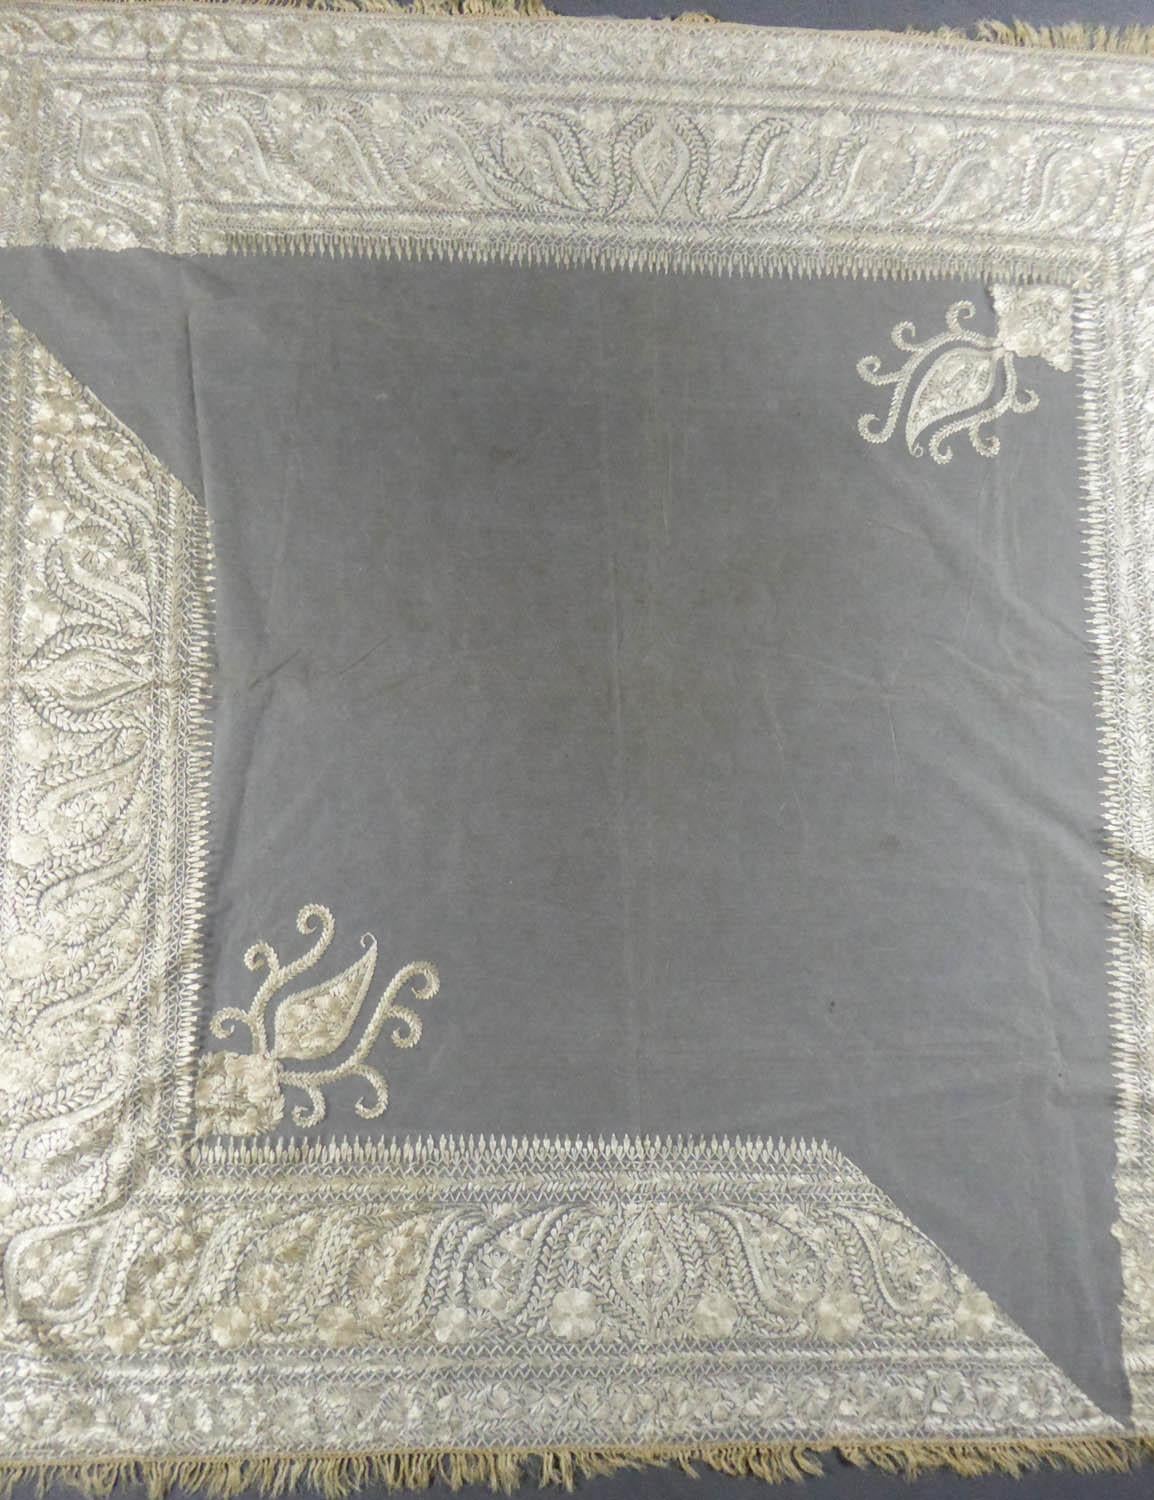 1840s shawl